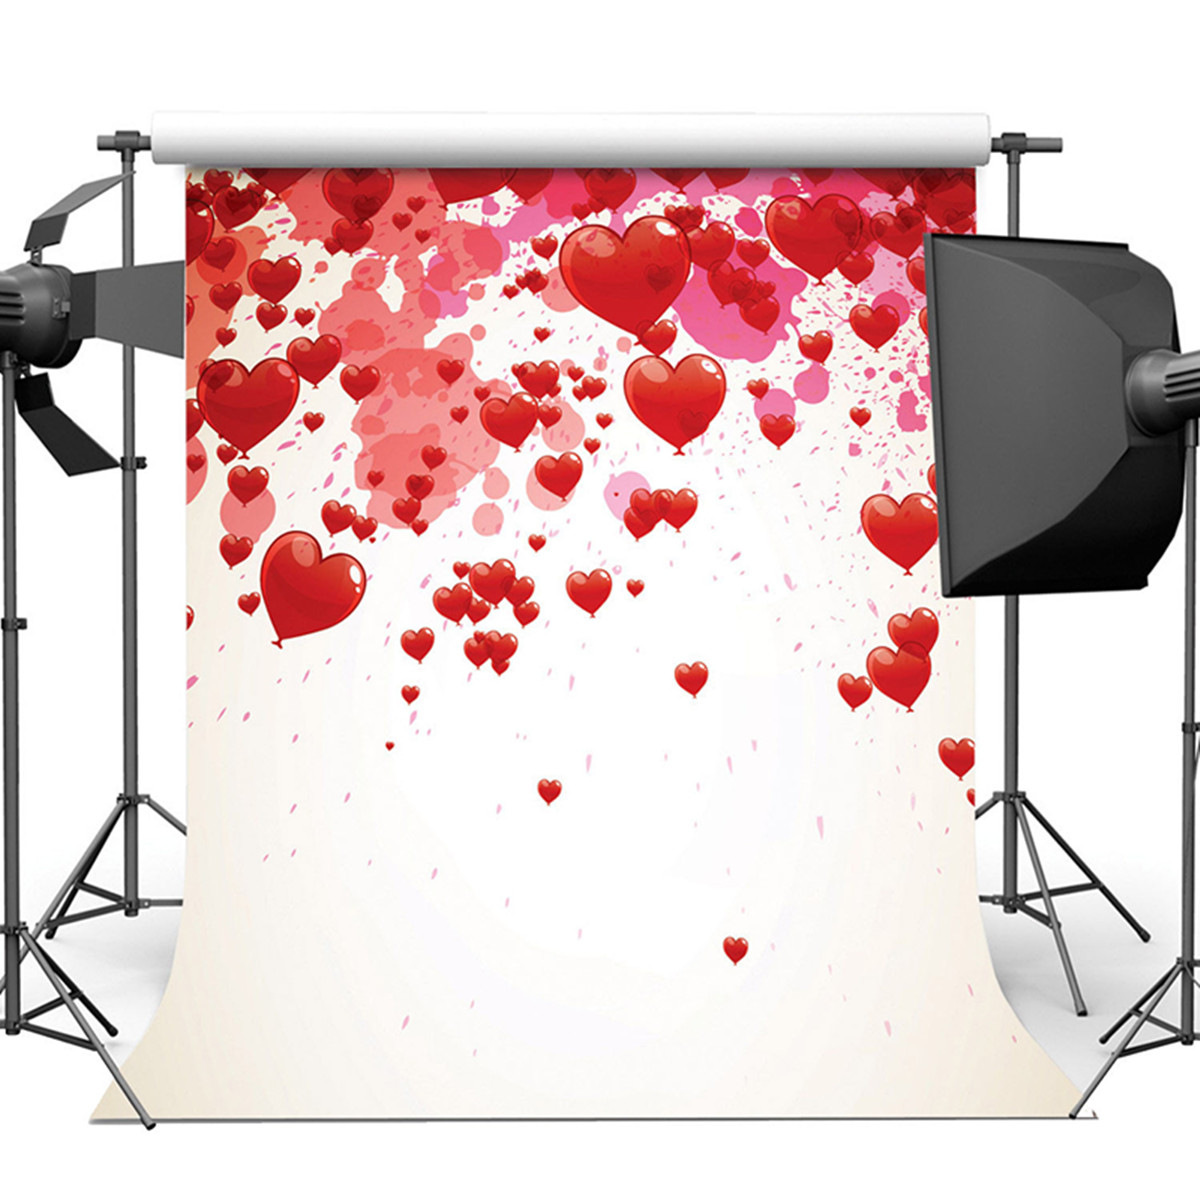 

8X8FT Vinyl Love Heart Photography Background Studio Backdrop Wedding Photo Prop